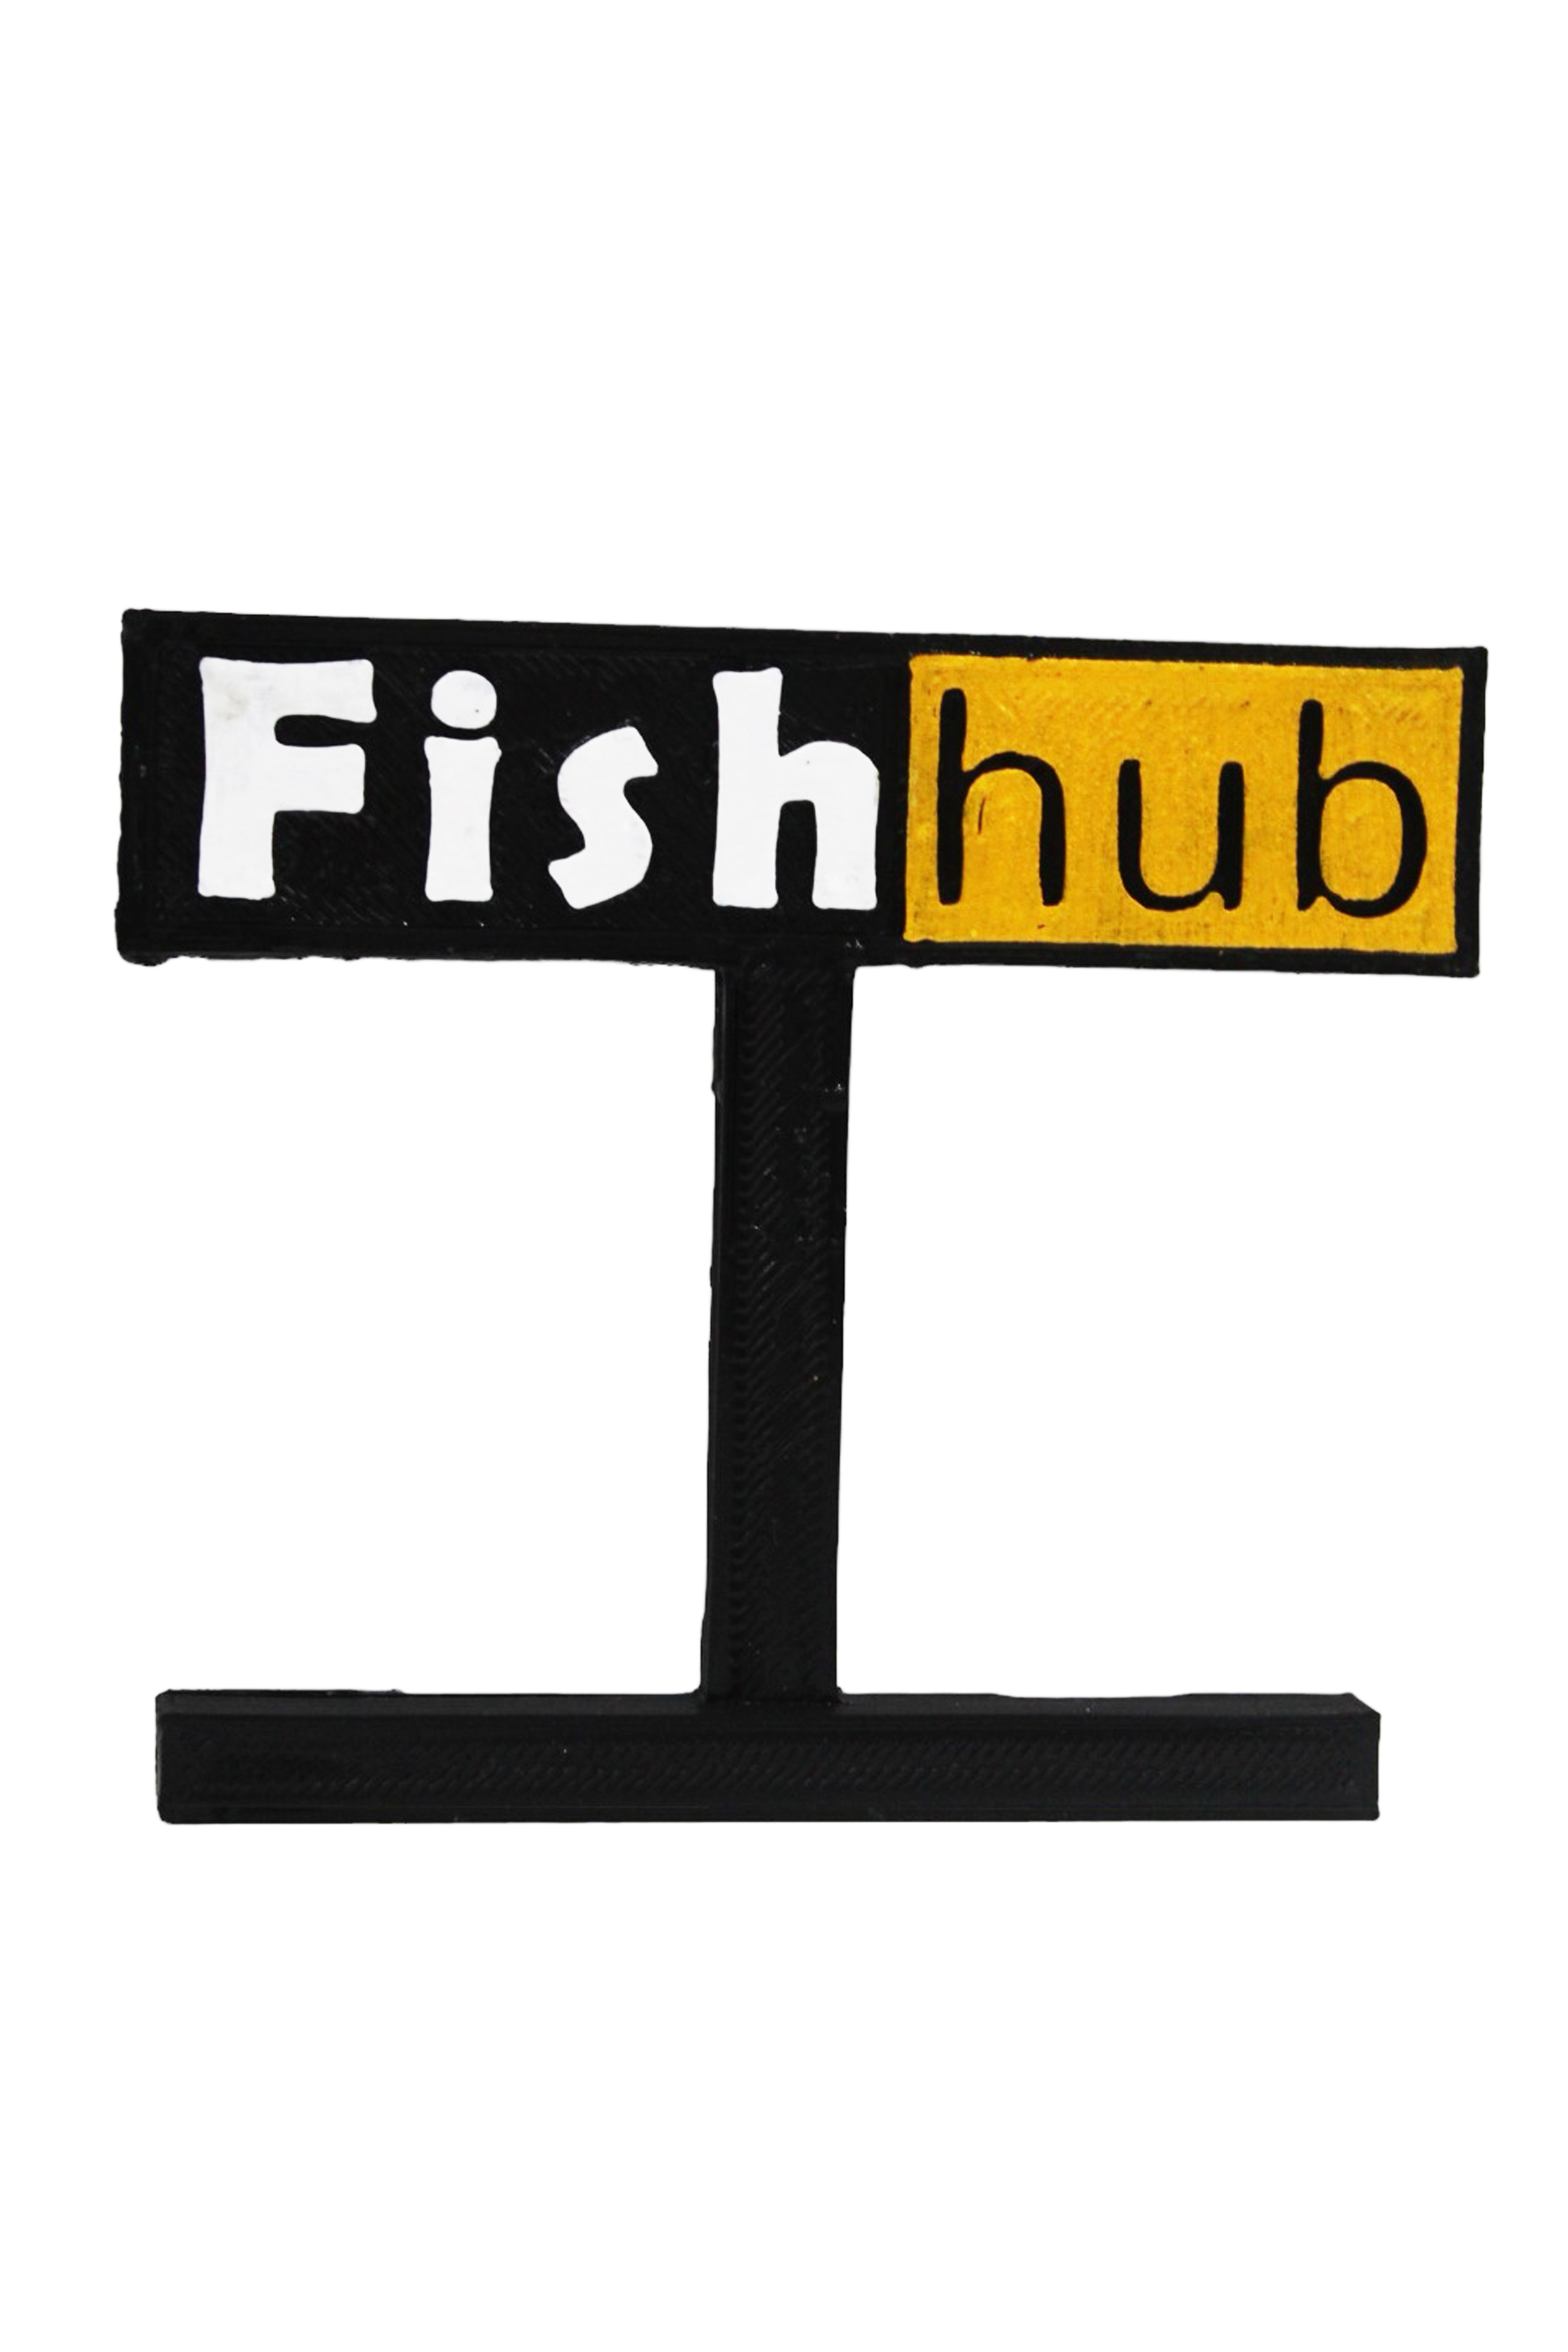 FishHub Aquarium Decor Accessory Funny Sign